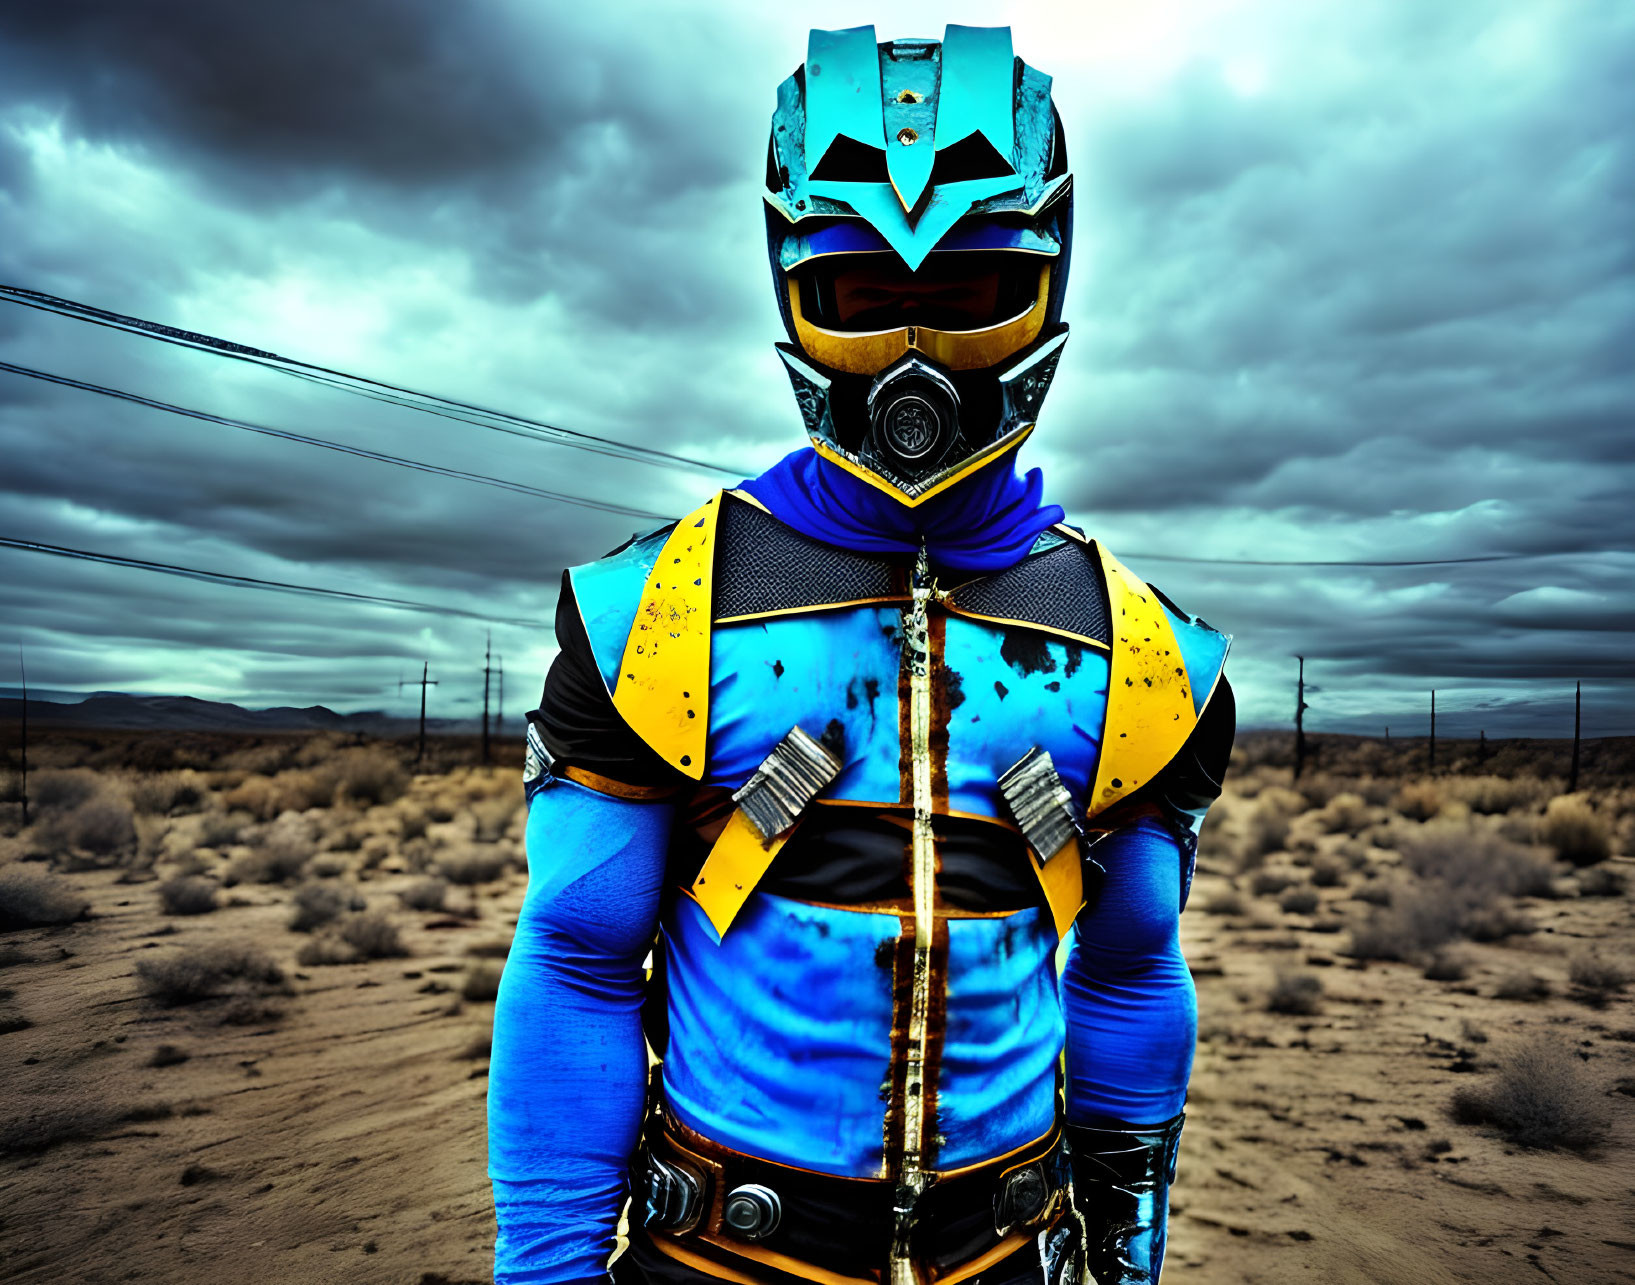 Futuristic blue and yellow armored person in desert landscape